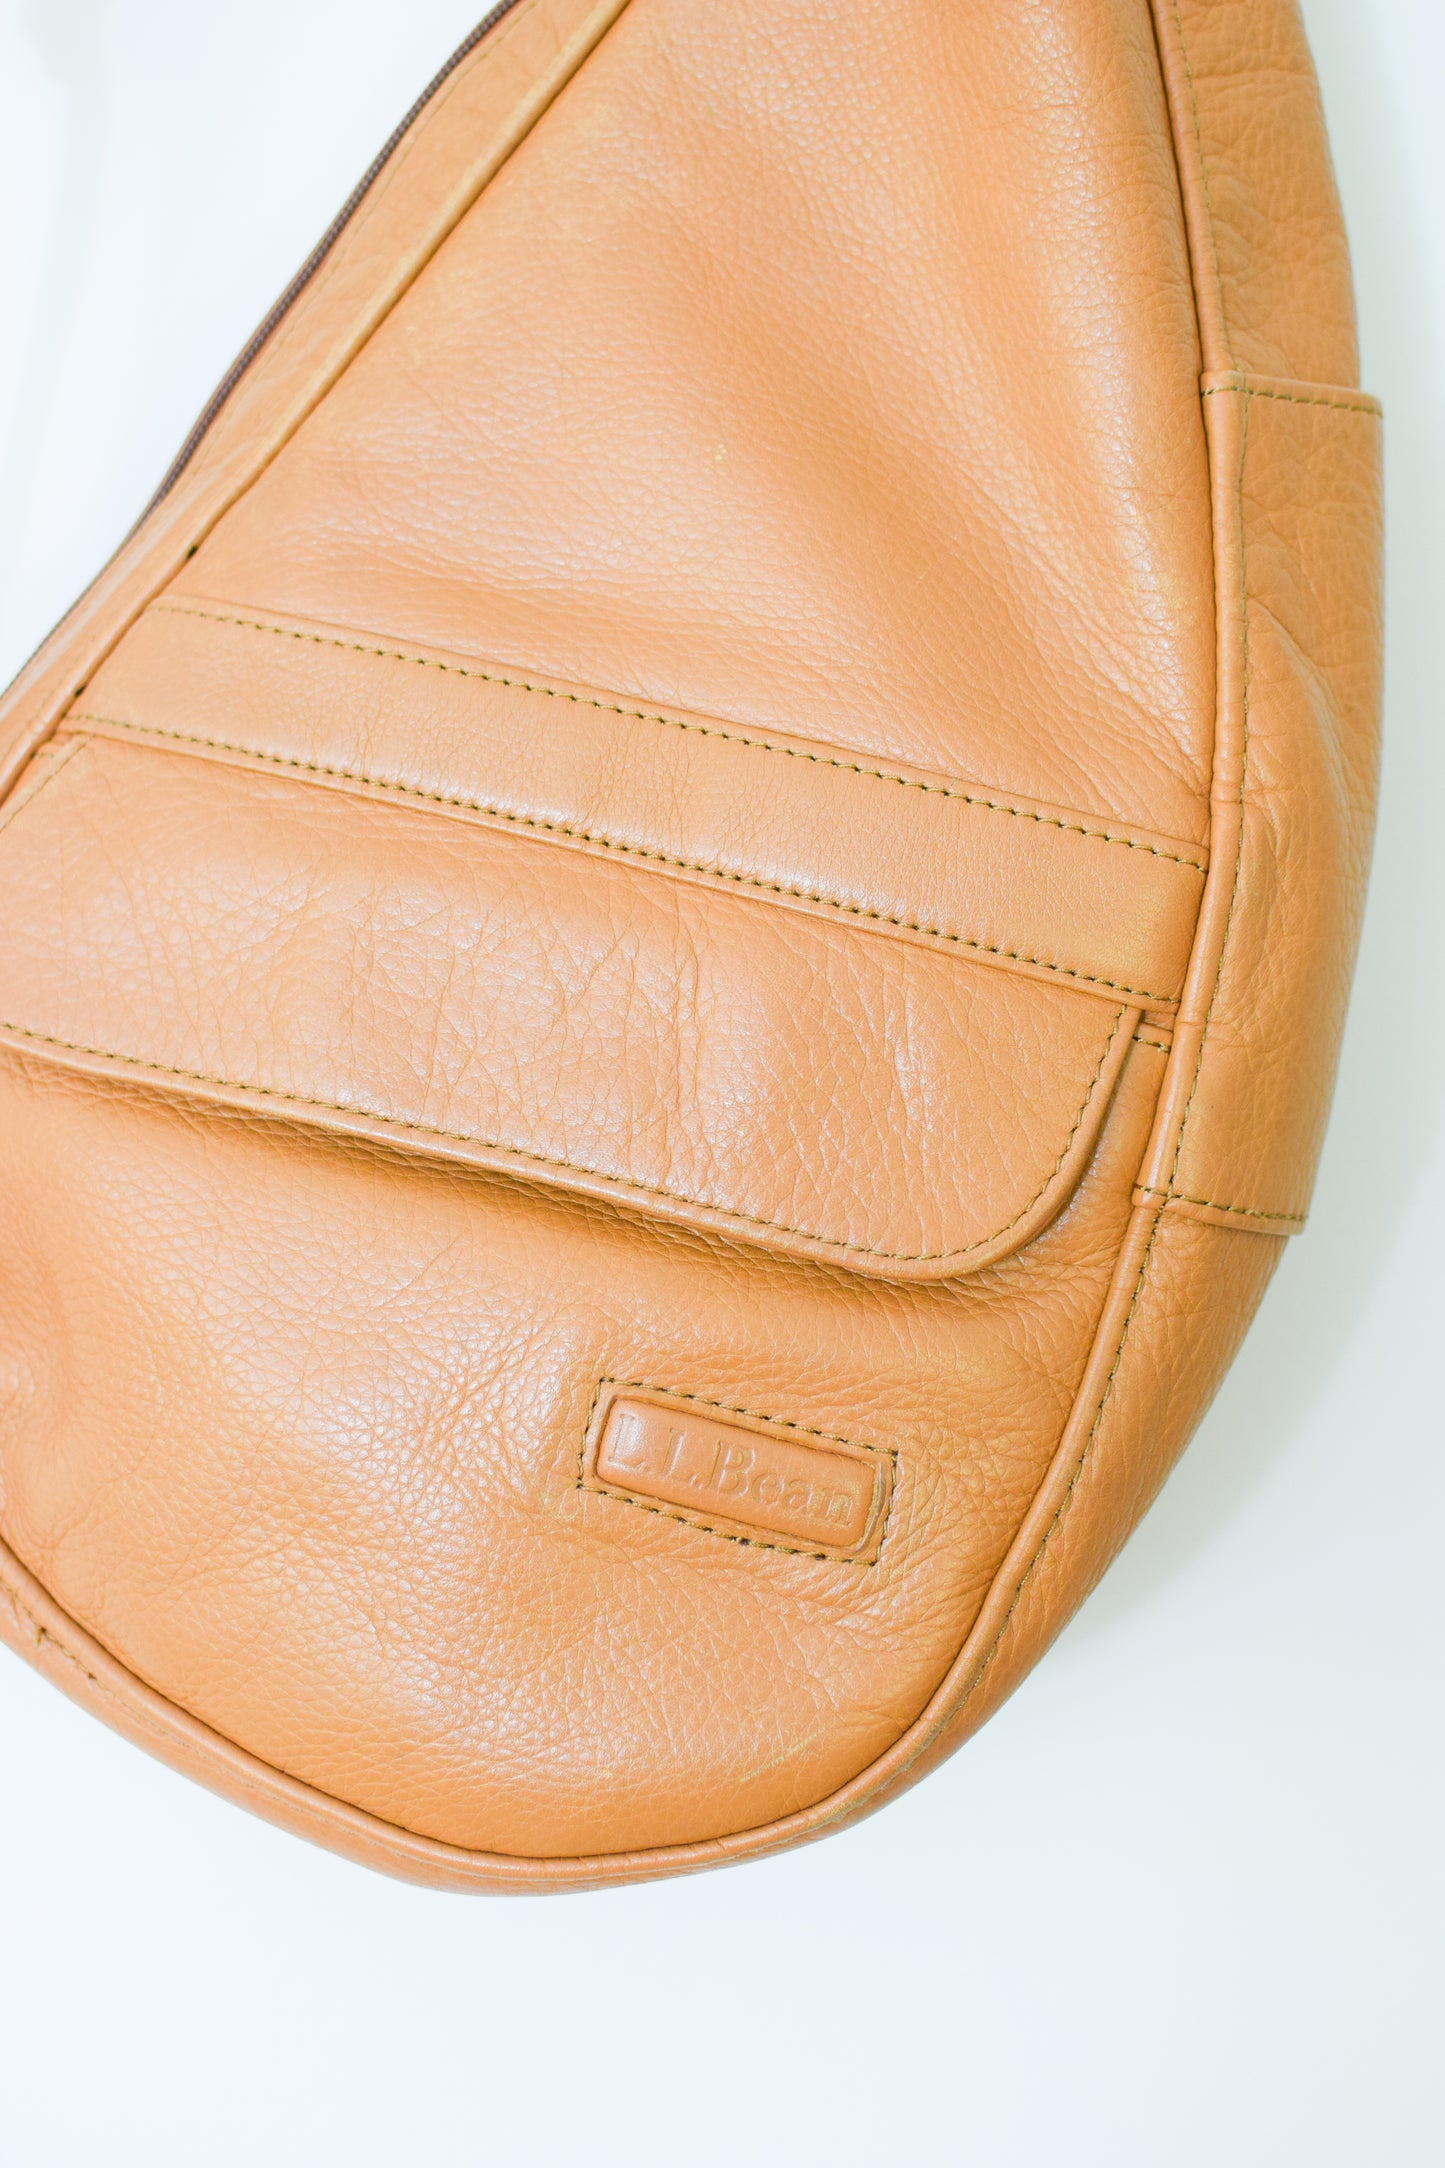 Vintage LL Bean AmeriBag Leather Bag